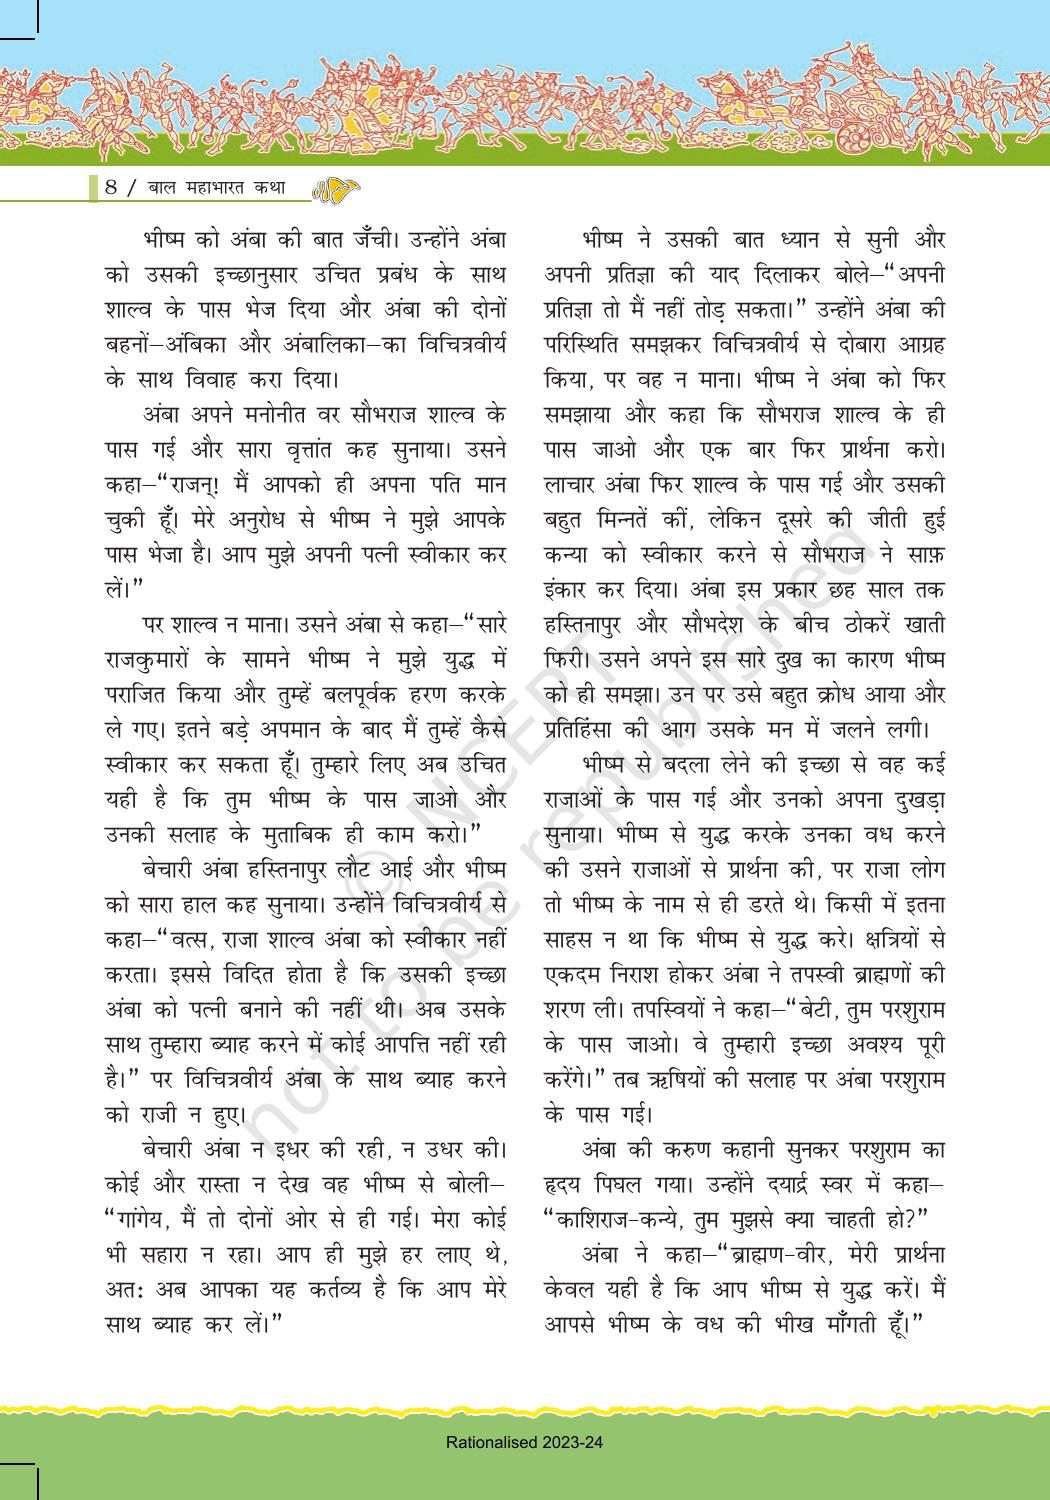 NCERT Book for Class 7 Hindi: Chapter 1-बाल महाभारत कथा - Page 8